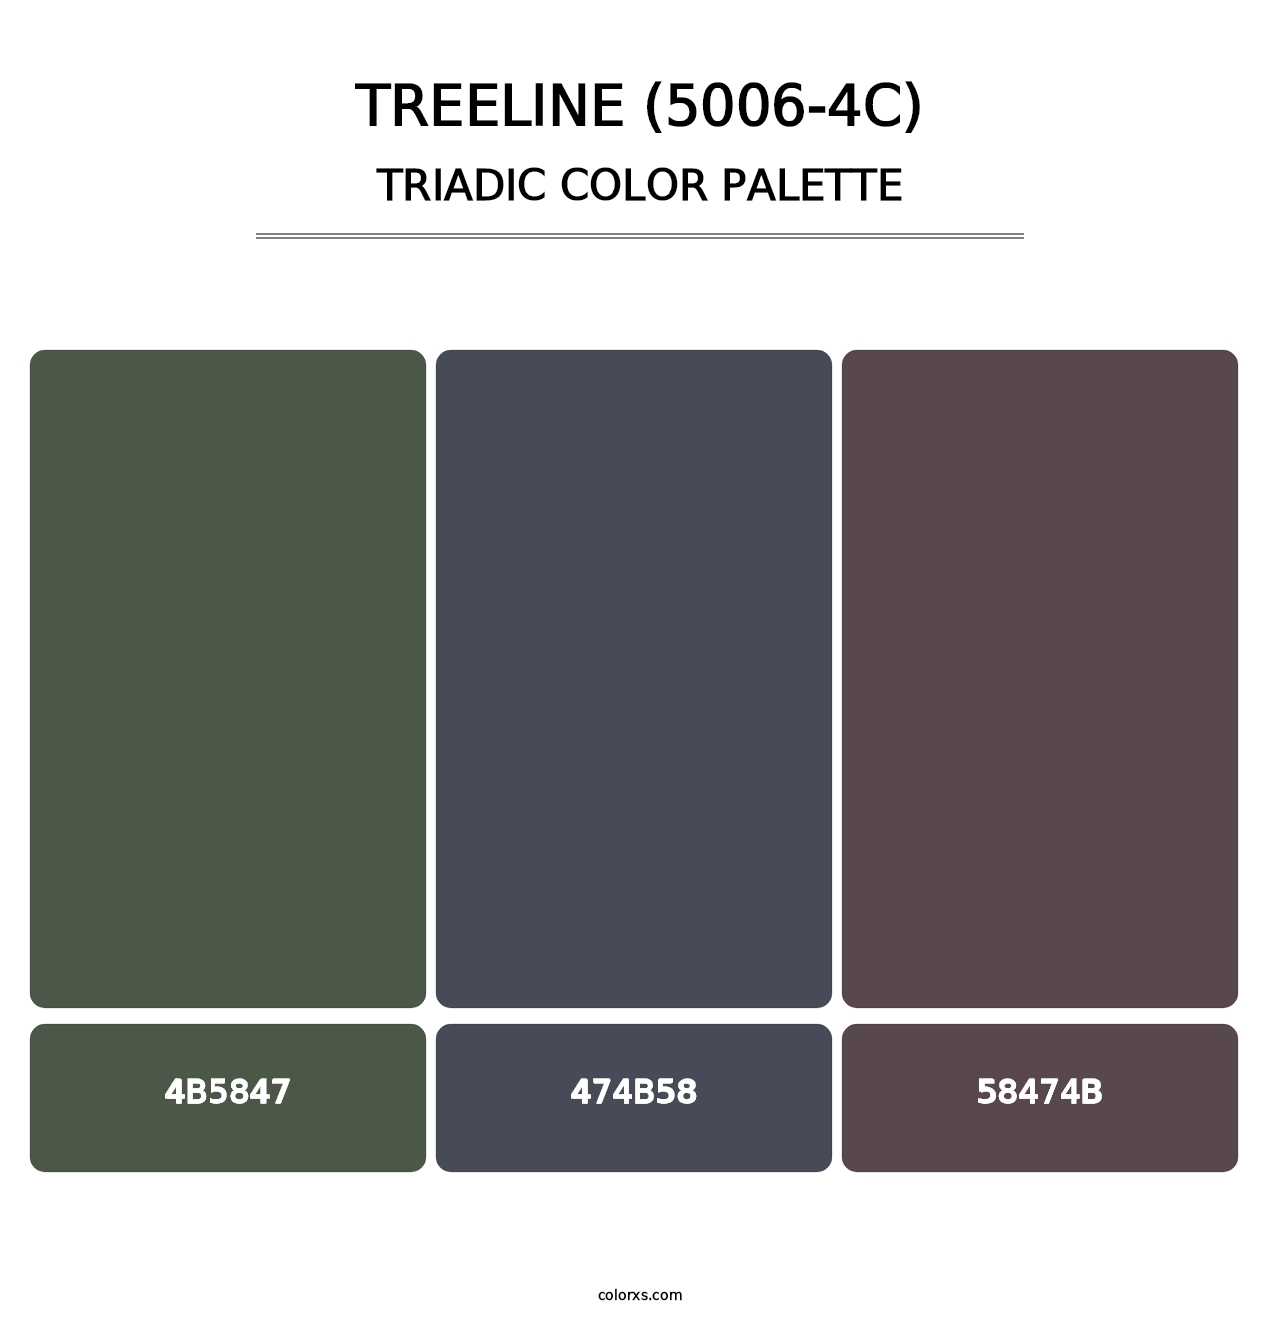 Treeline (5006-4C) - Triadic Color Palette